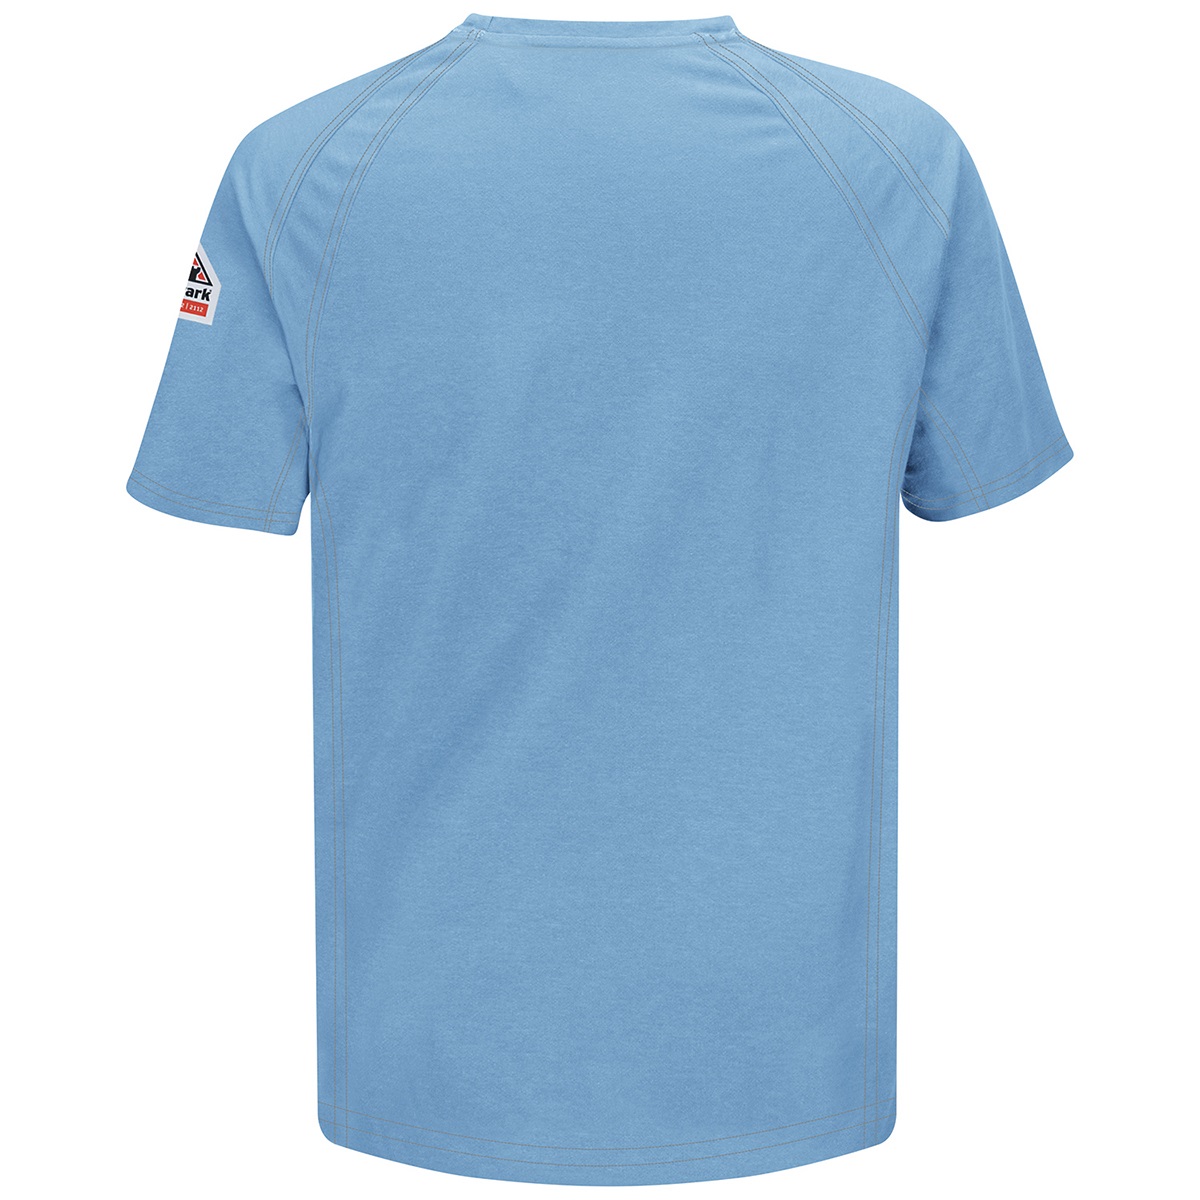 iQ Short Sleeve FR Shirt in Blue